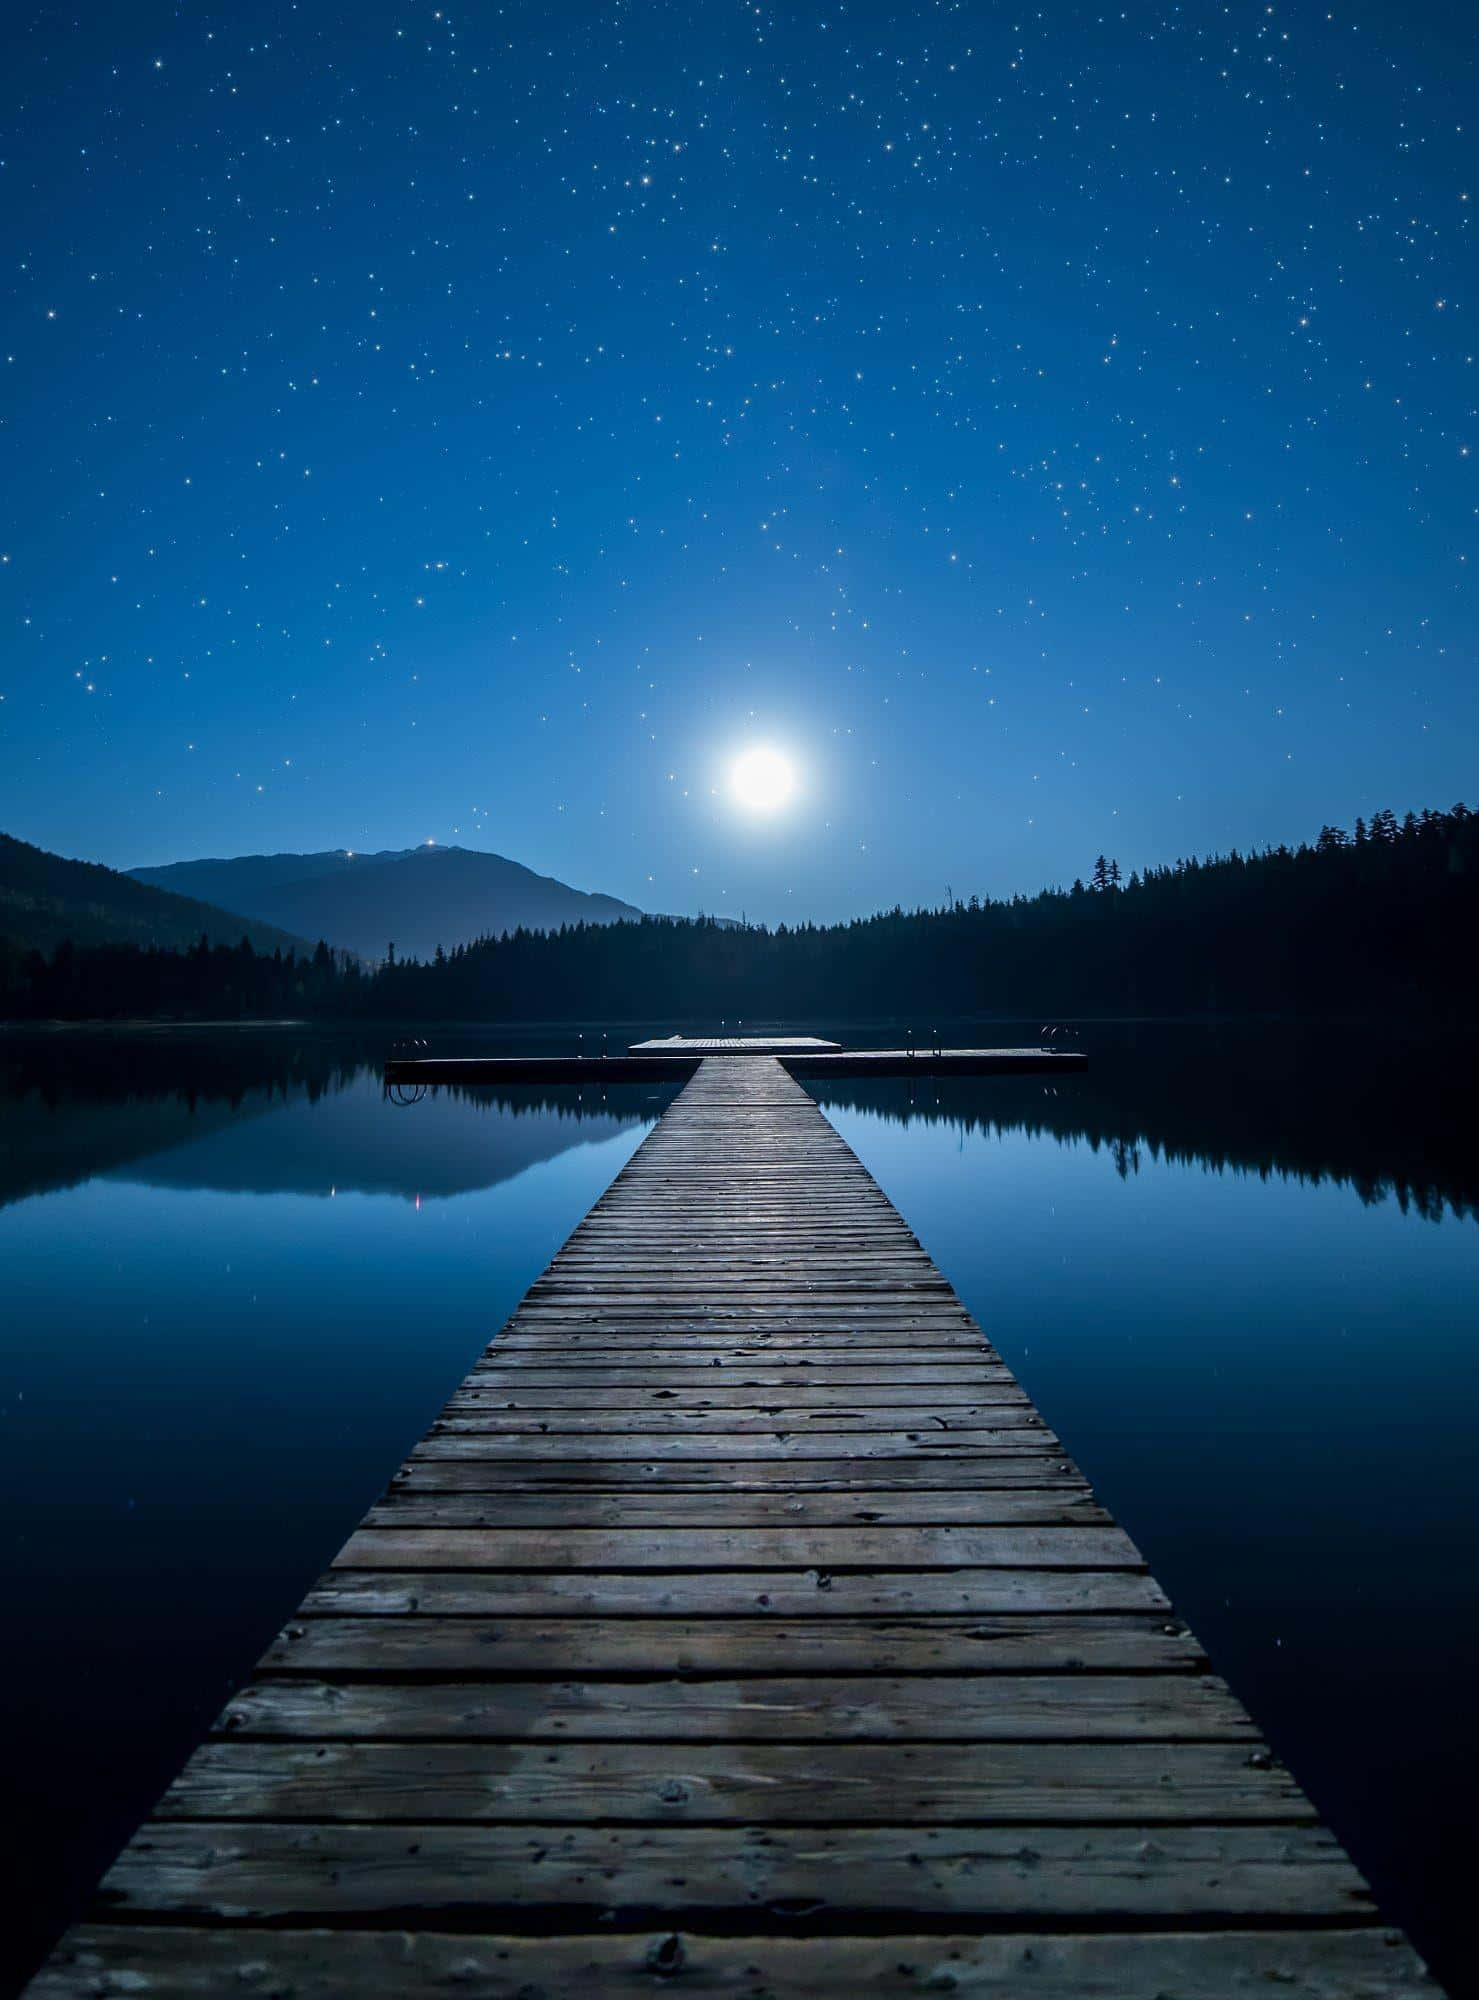 Enchanting Moonlit Night Over Calm Waters